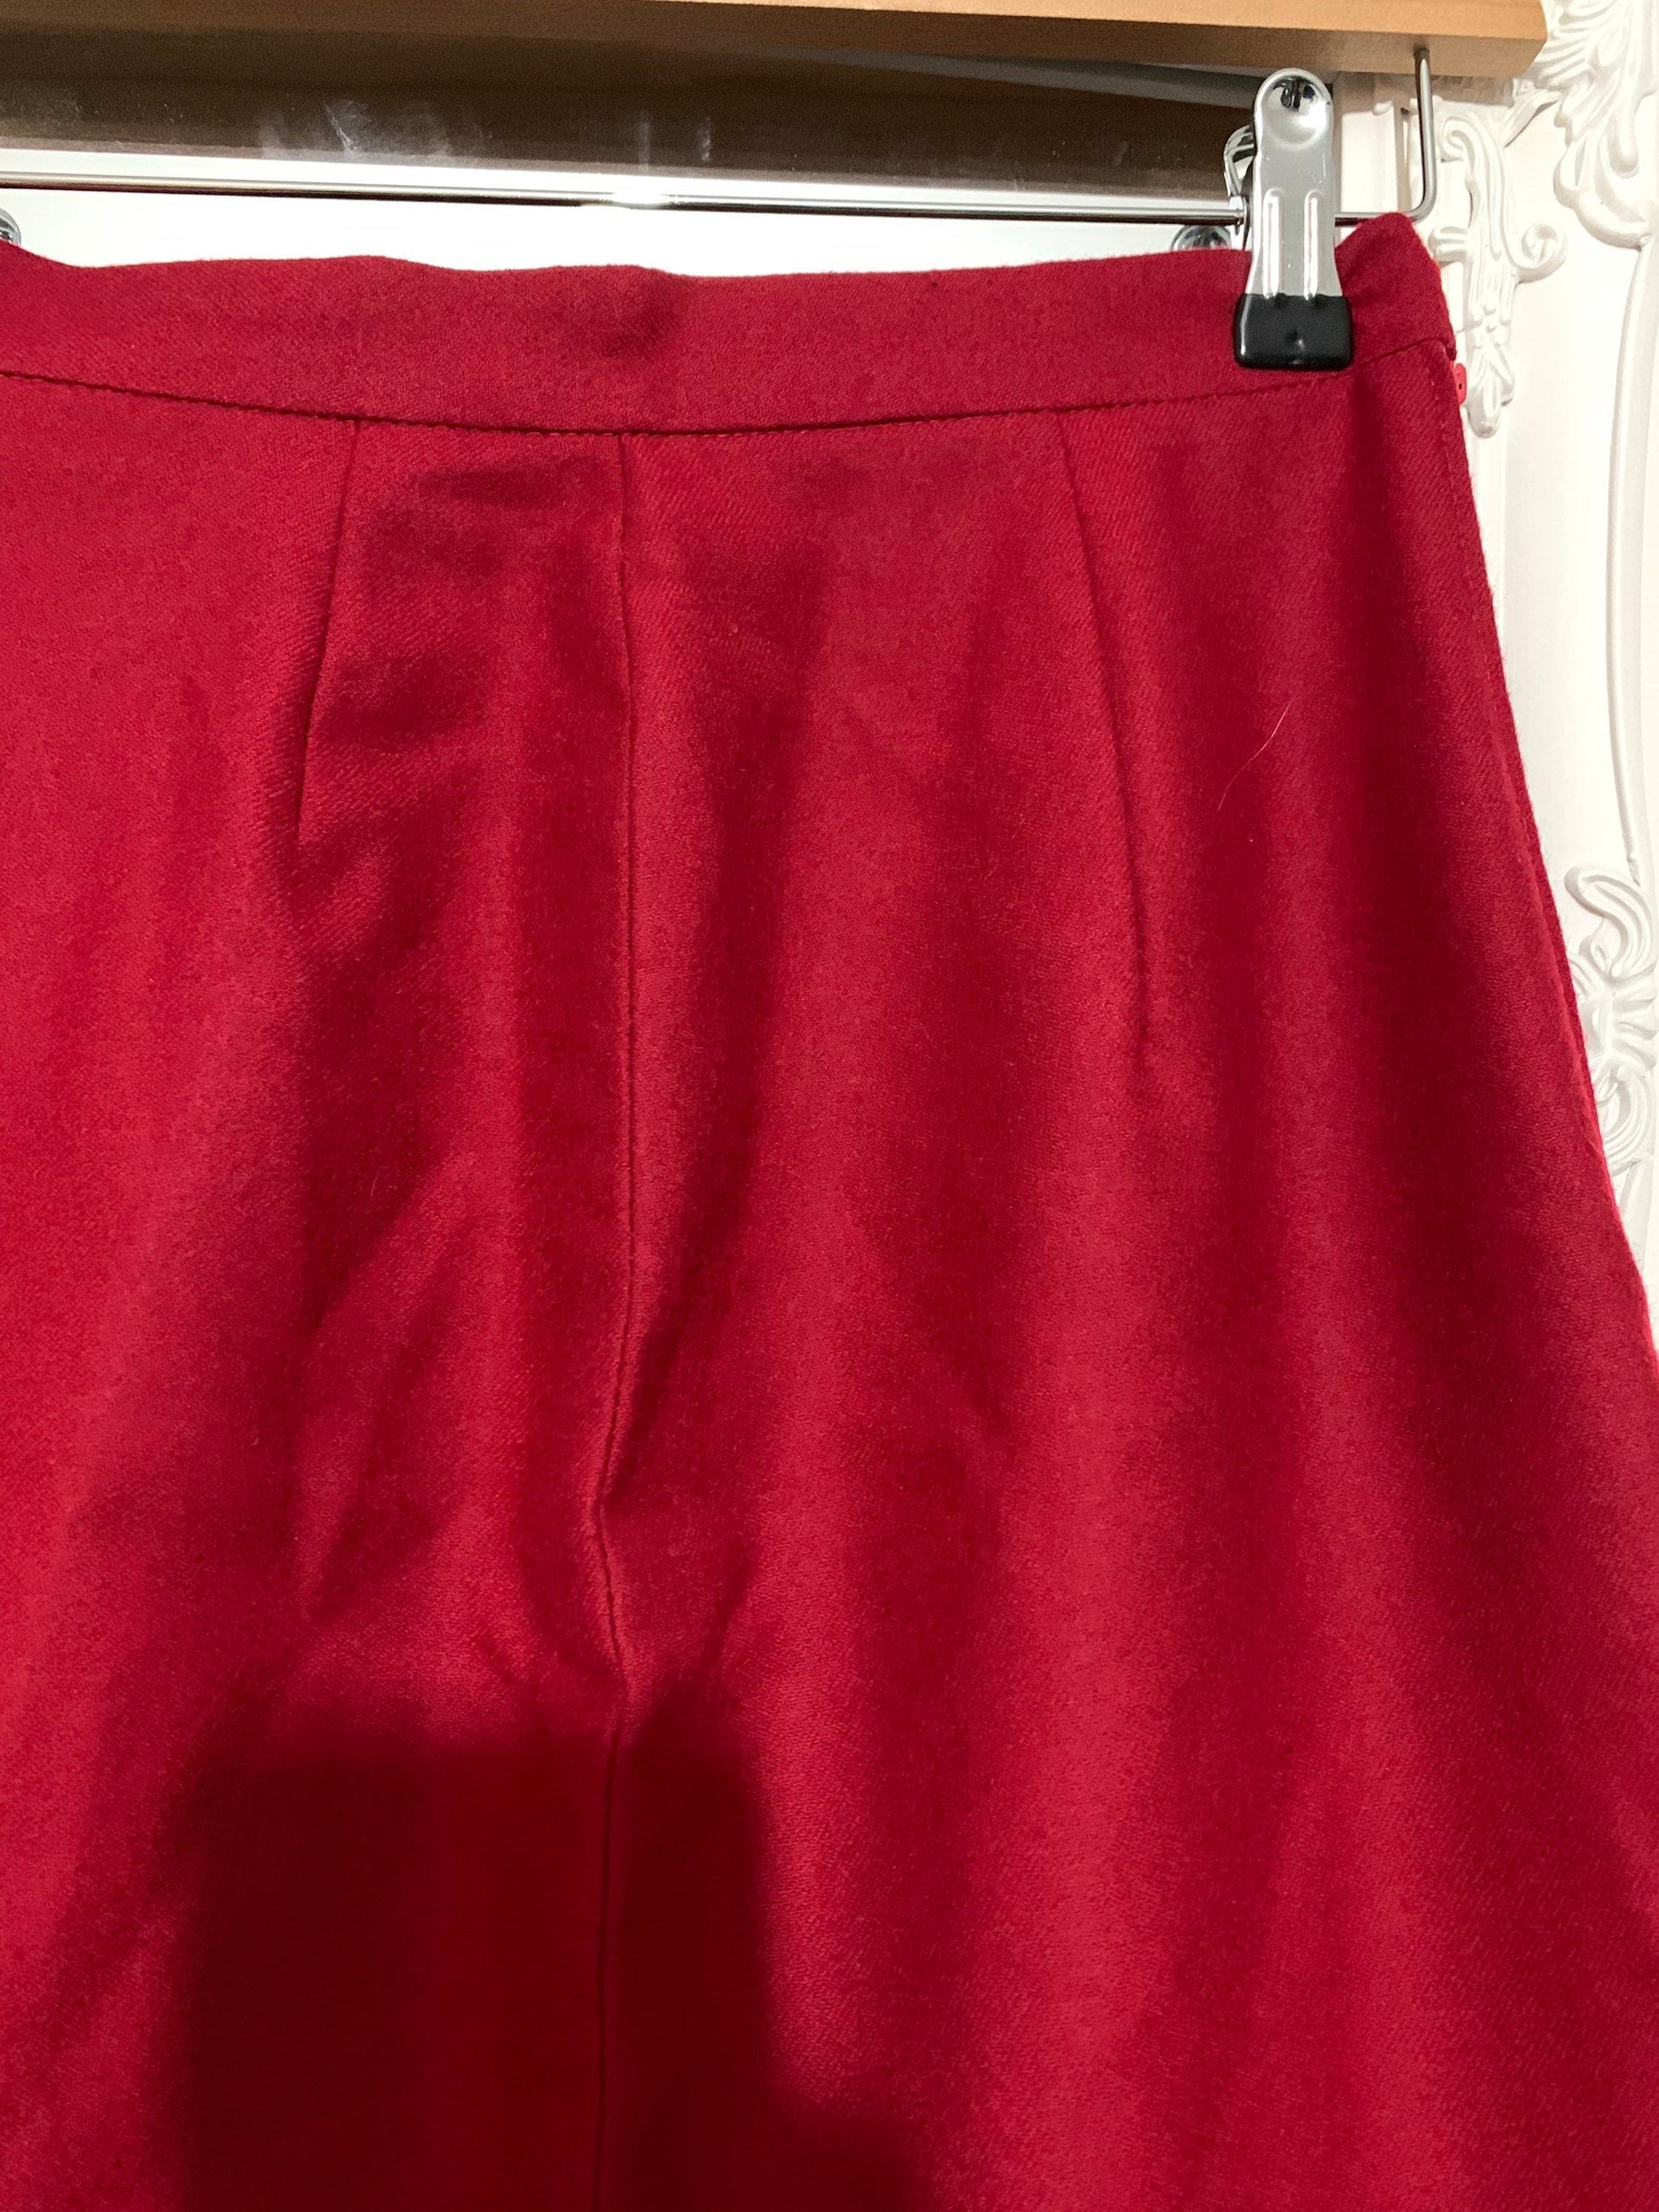 Vintage Red Wool Skirt - A Line with slightly flared hem - UK8 - 1970s